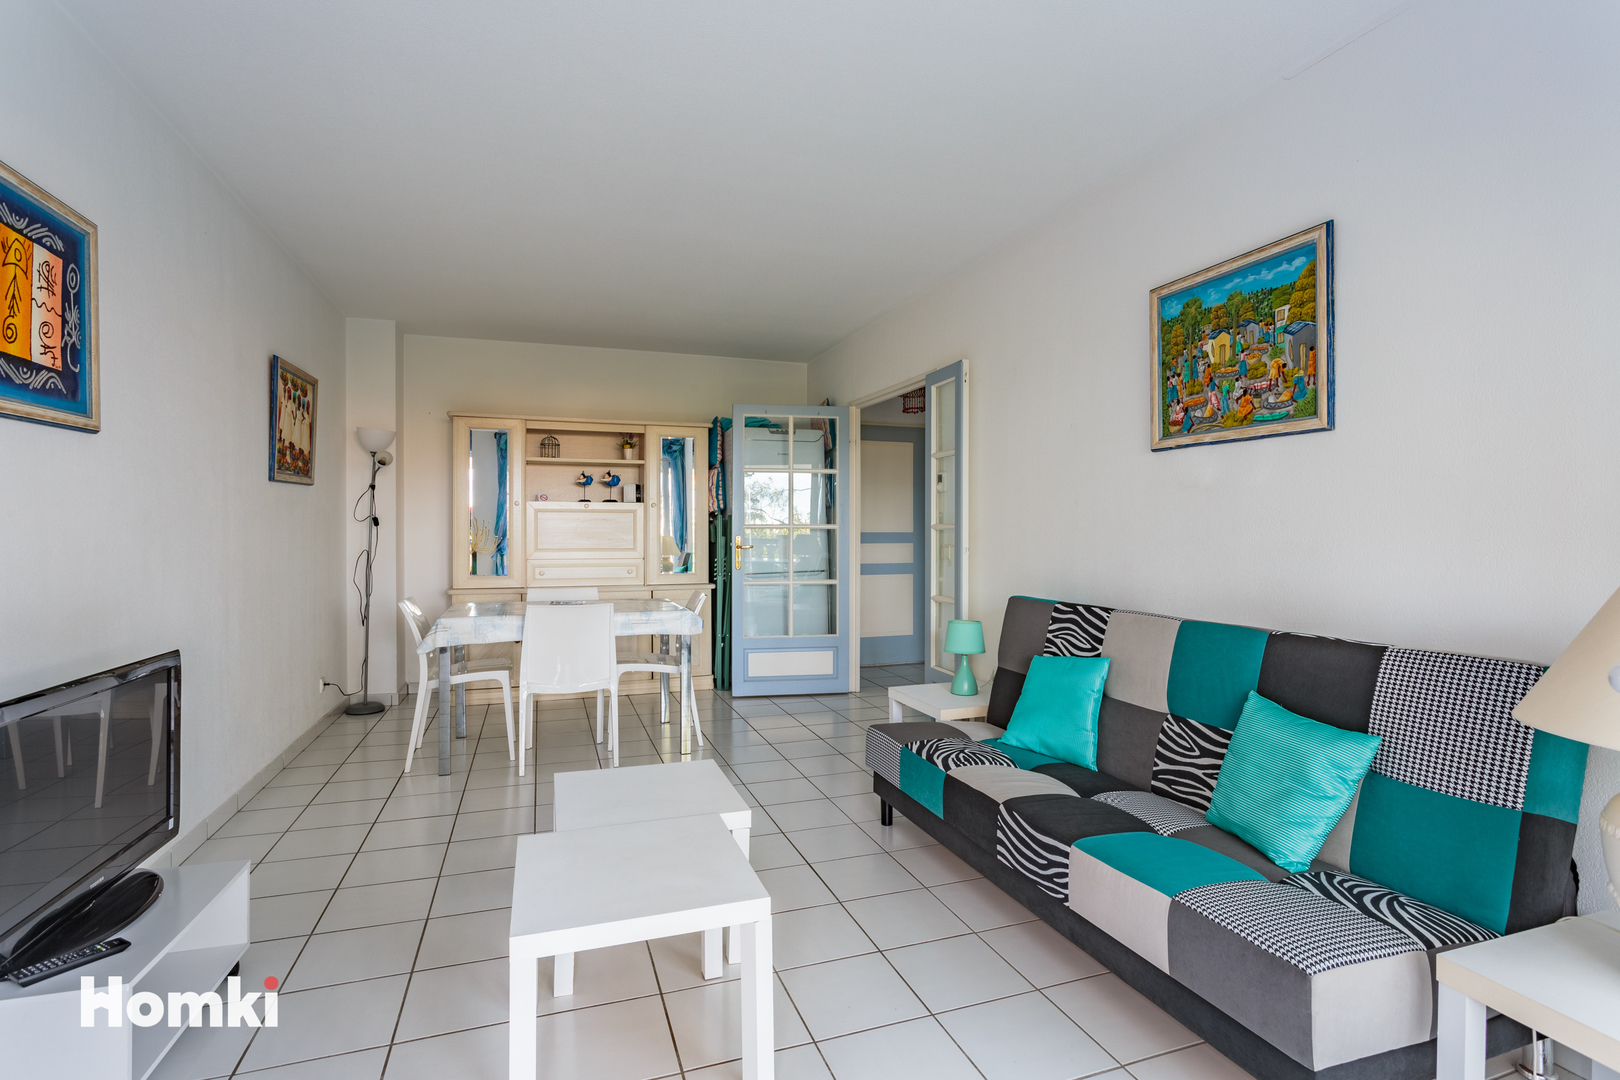 Homki - Vente Appartement  de 48.0 m² à Biarritz 64200